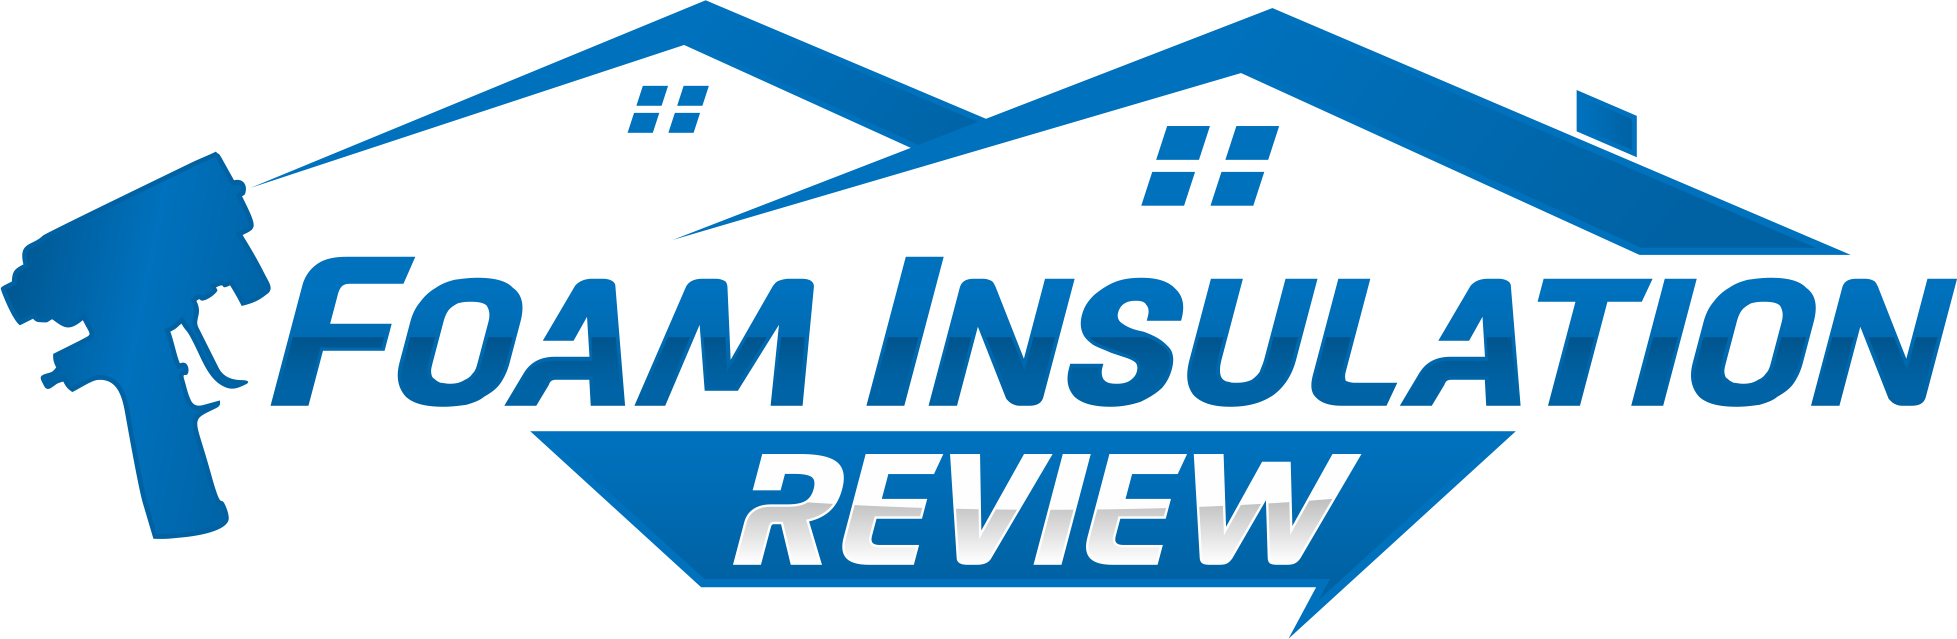 Foam Insulation Review